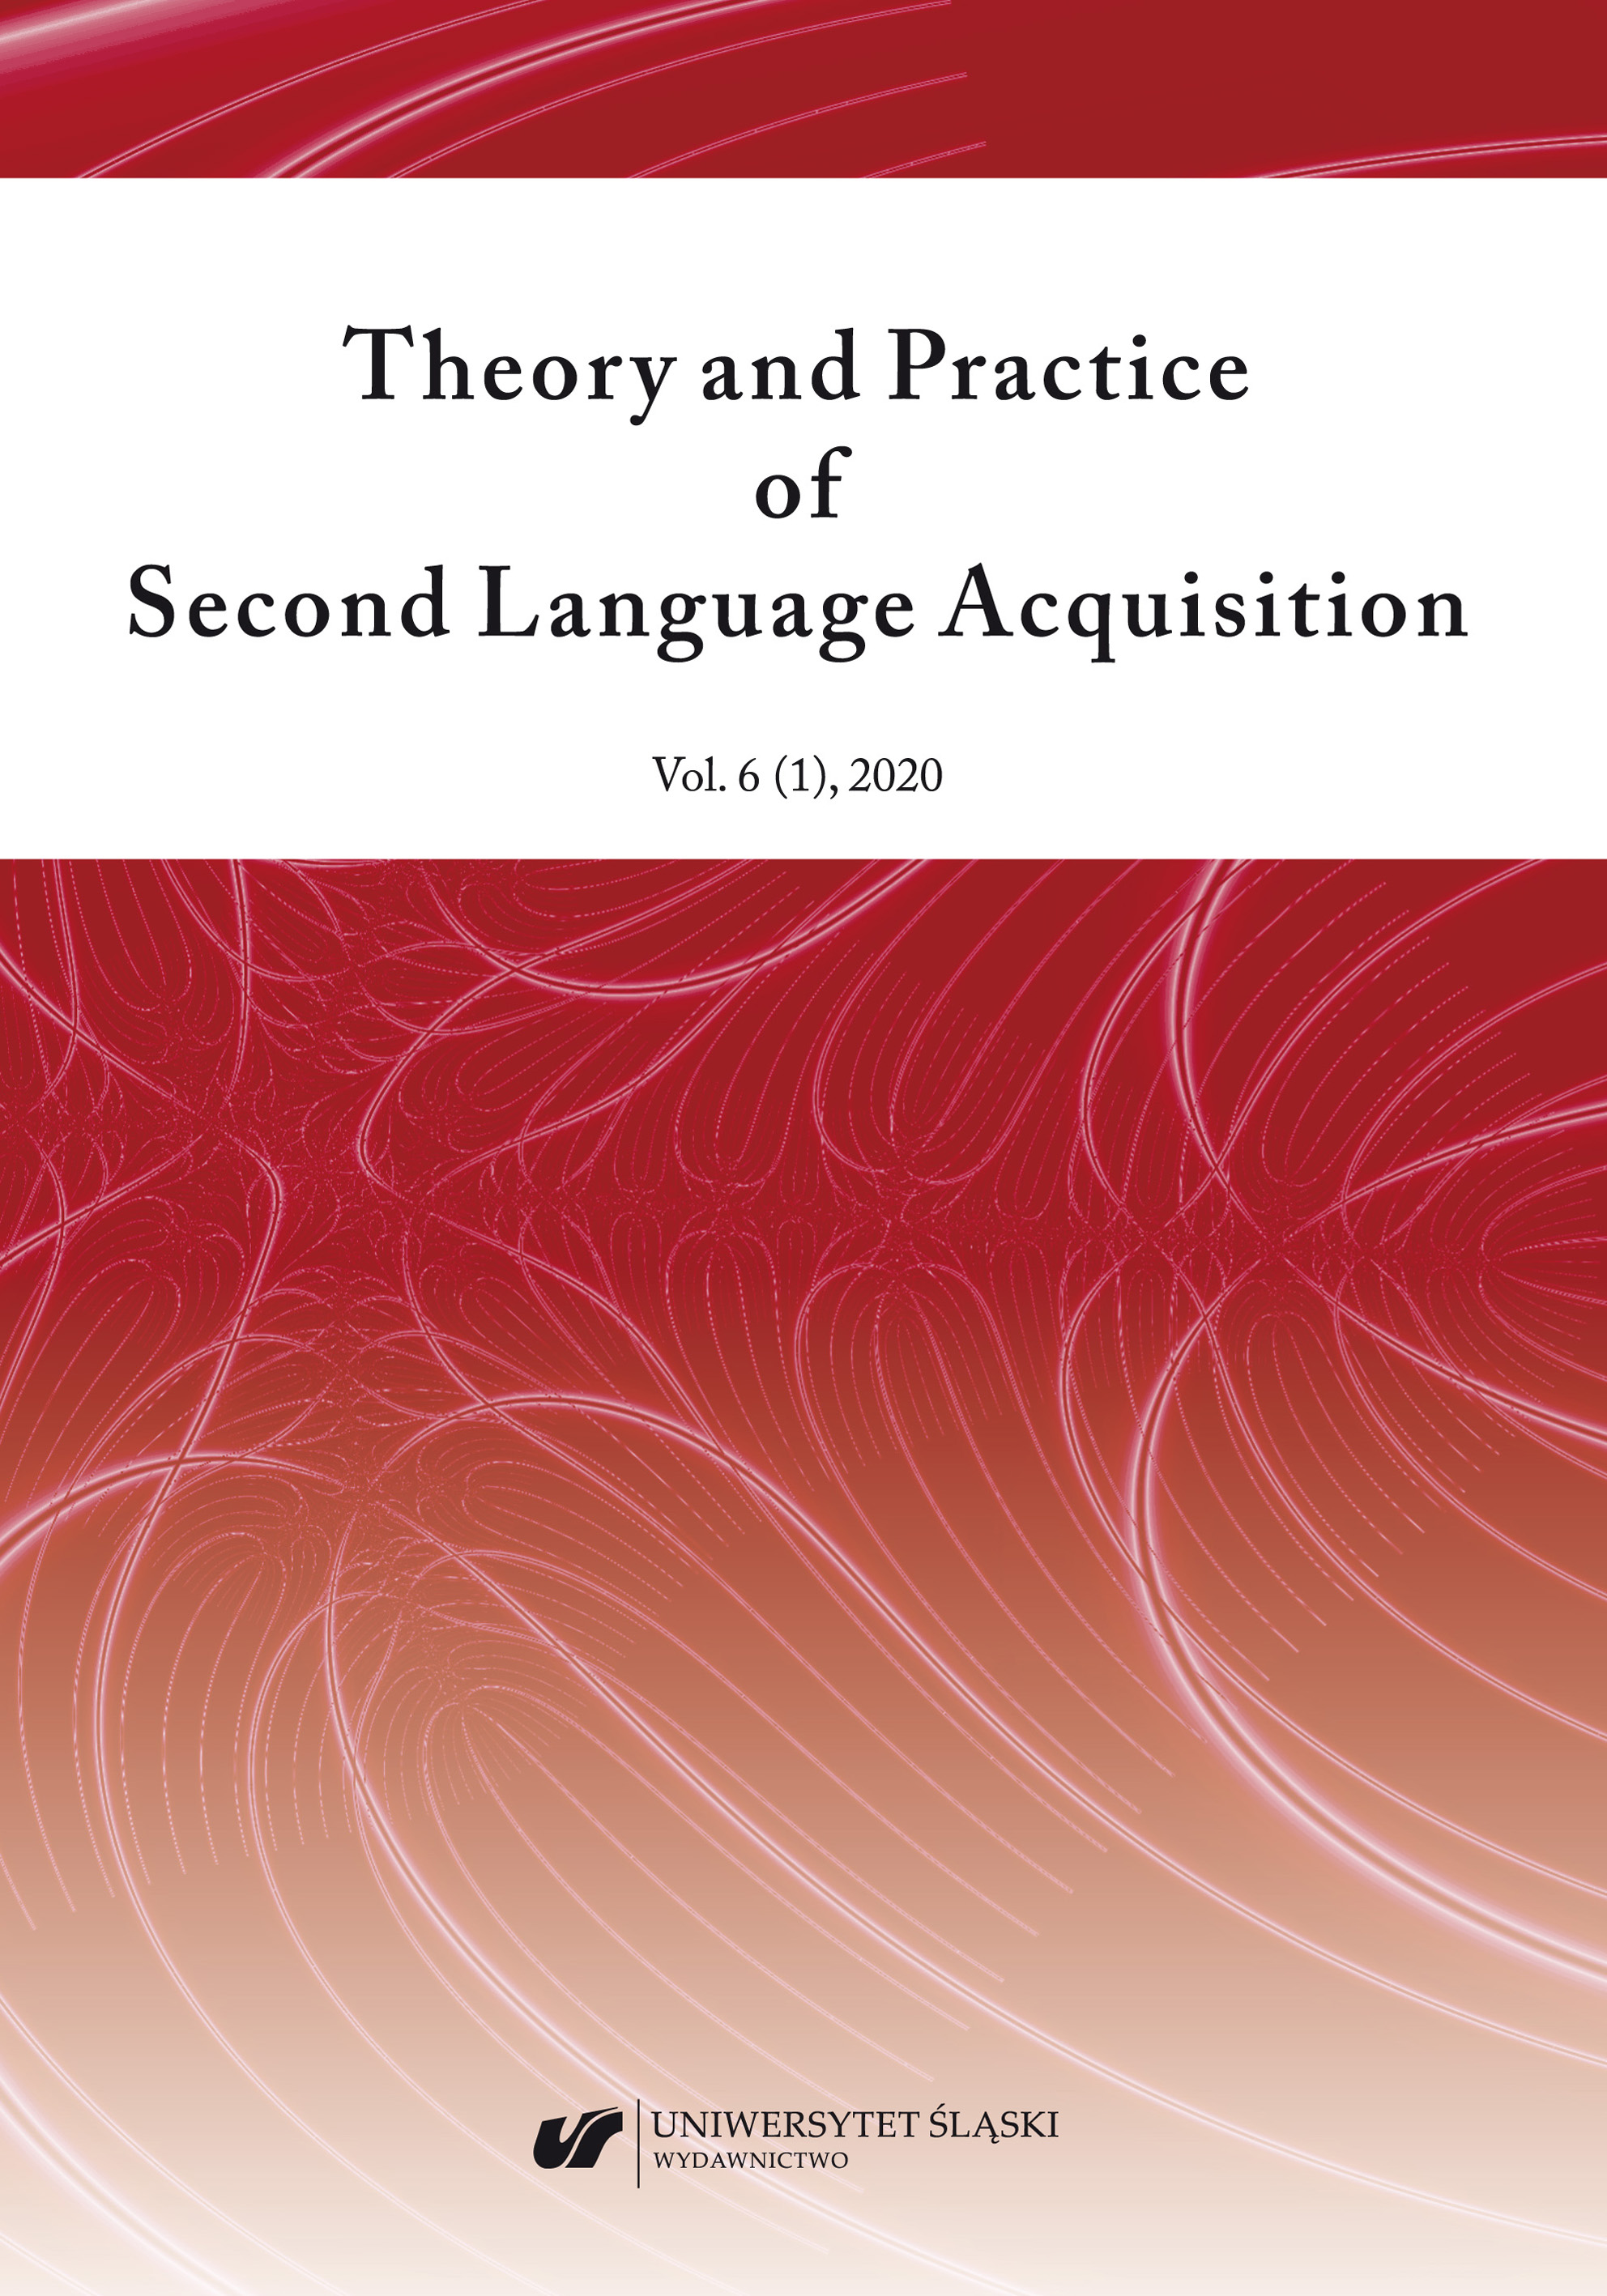 Vaclav Brezina, “Statistics in Corpus Linguistics: A Practical Guide”. Cambridge: Cambridge University Press, 2018, ISBN 978-107-12570-4, 296 pages Cover Image